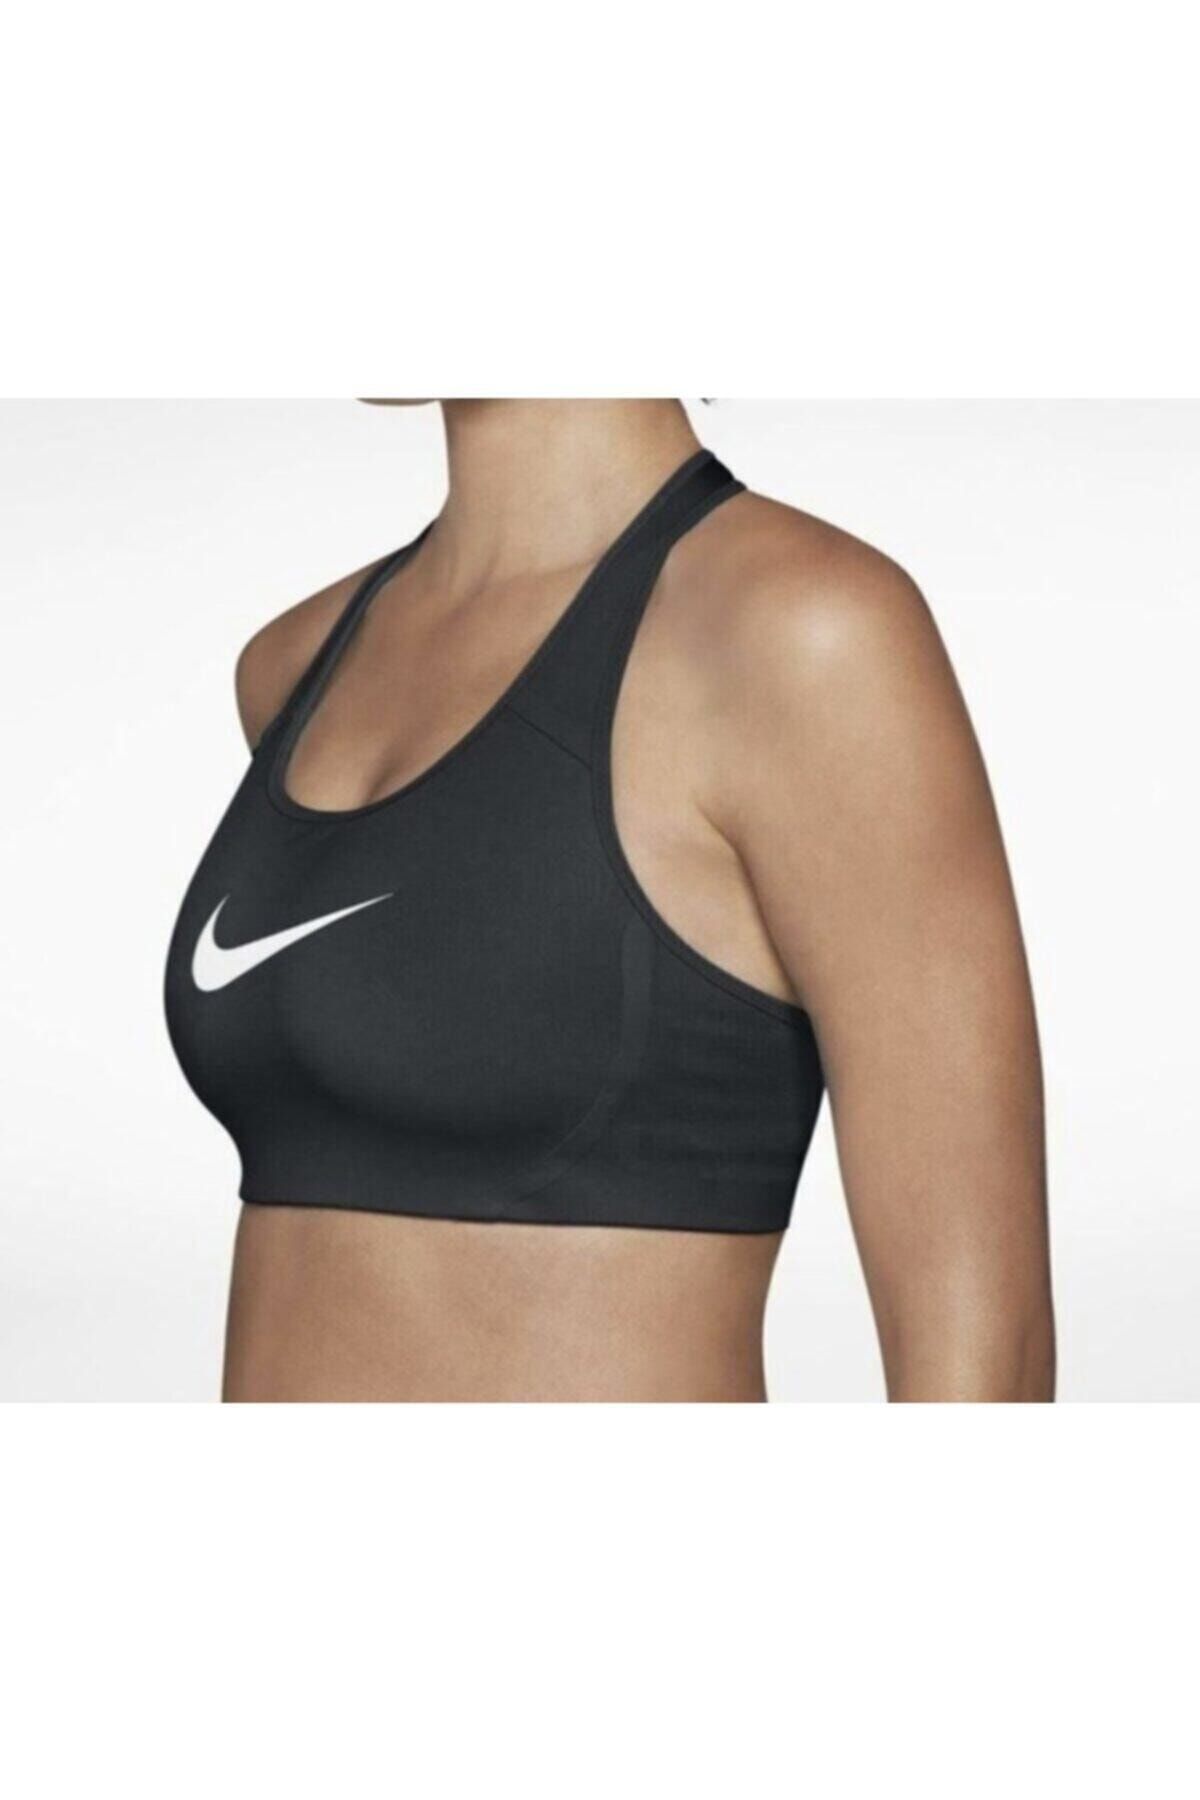 Buy Nike Women's Victory High Support Sports Bra Black White AJ5219-010 (S)  at